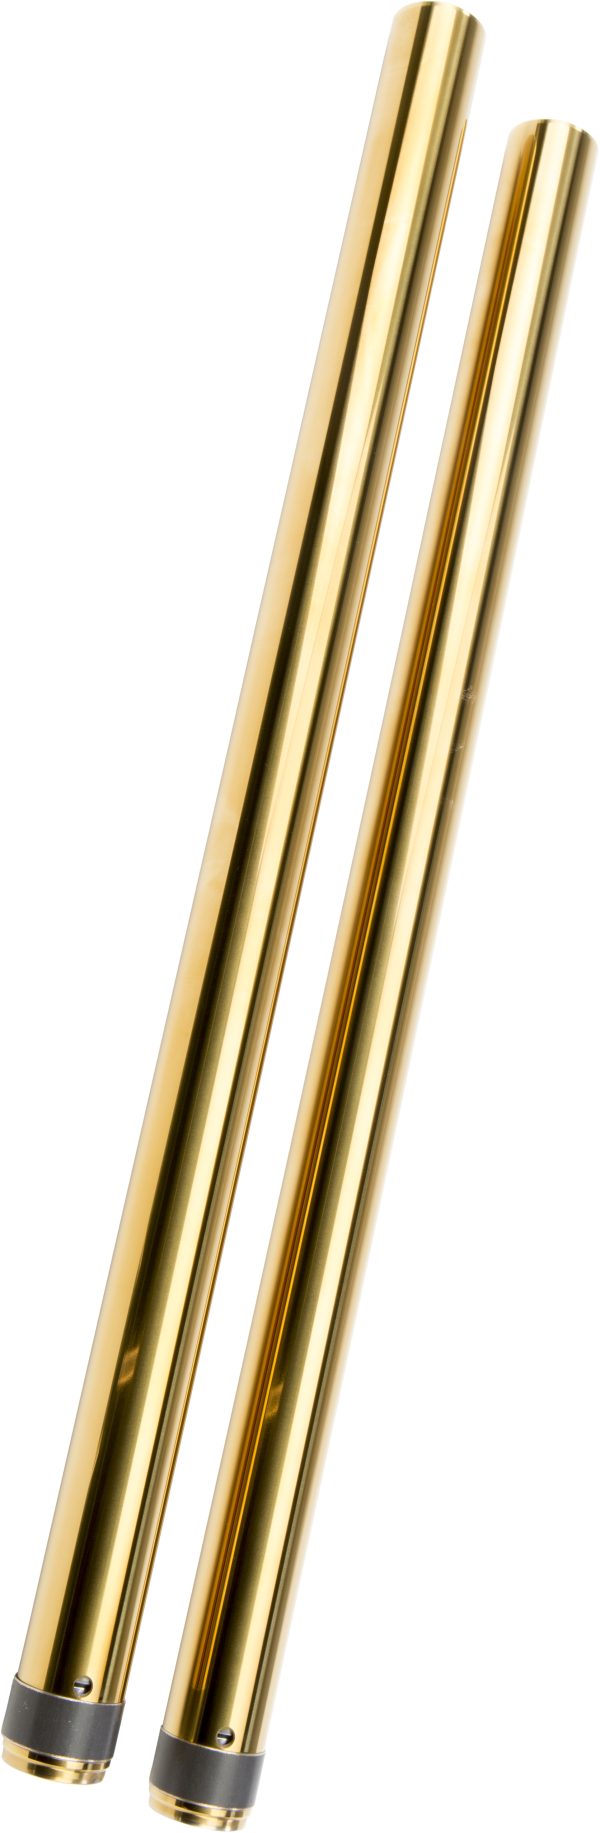 Gold, Gold Fork Tubes 39mm 27&#8243; O.S. Fxd for 1987-2018 Harley Davidson Models | Gold Titanium Nitrite Coating | Reduce Friction | Resist Wear | HARDDRIVE 191361079757, Knobtown Cycle